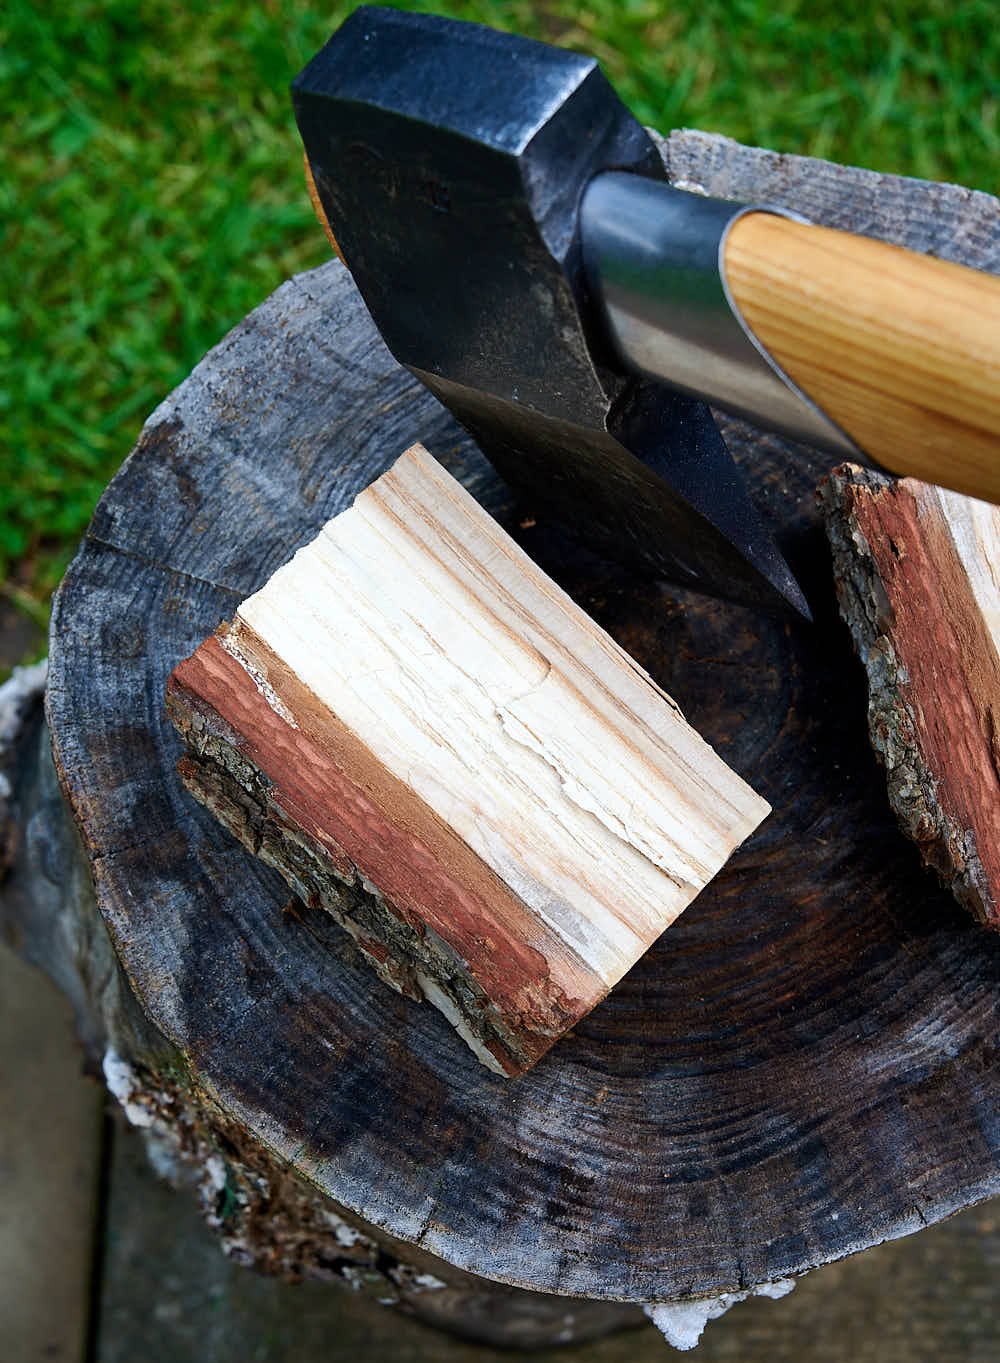 Wood chunk split by an ax.